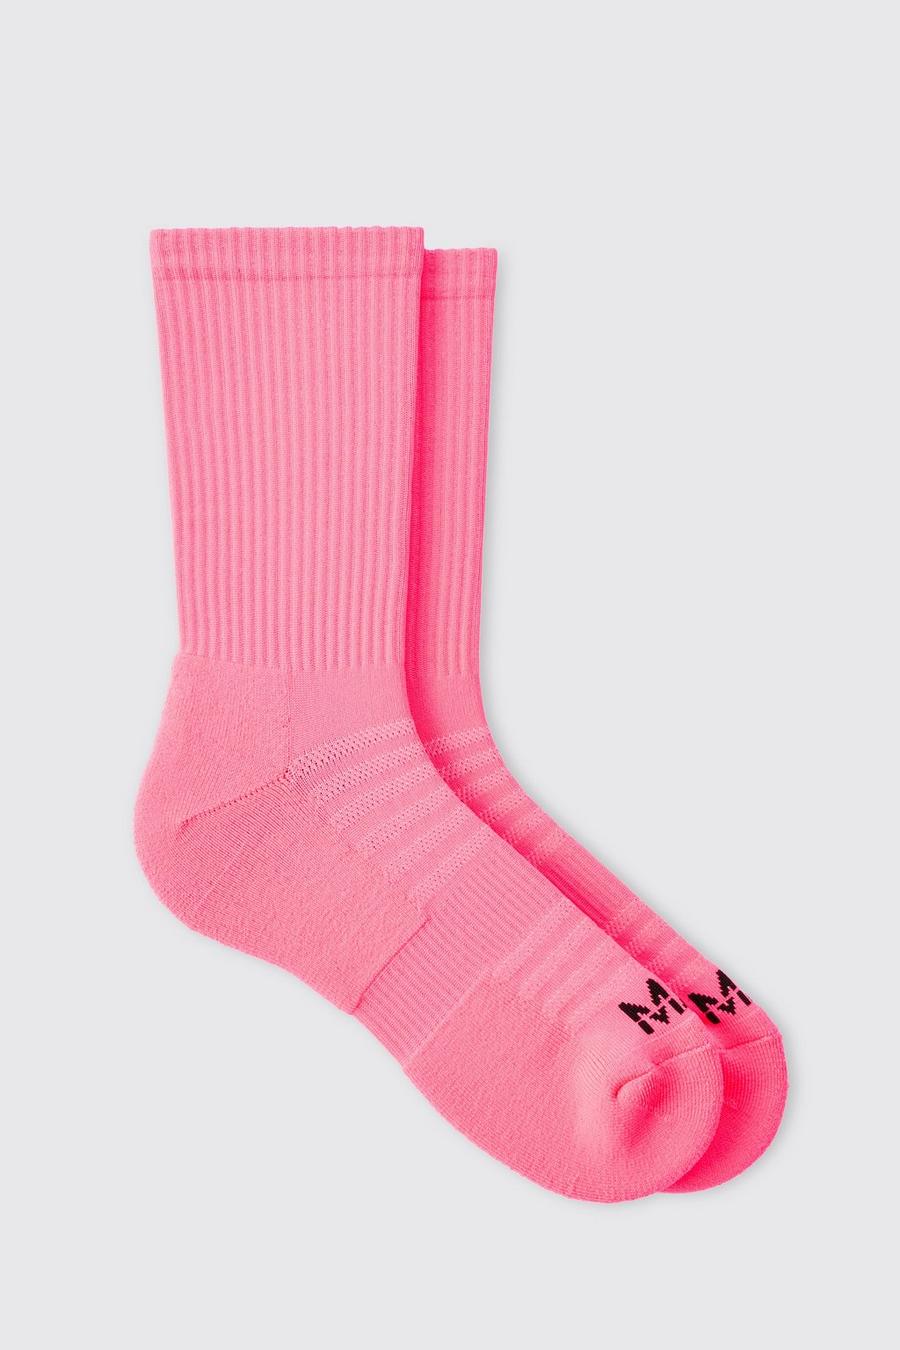 Calzini da corsa Man Active in colori fluo, Pink image number 1